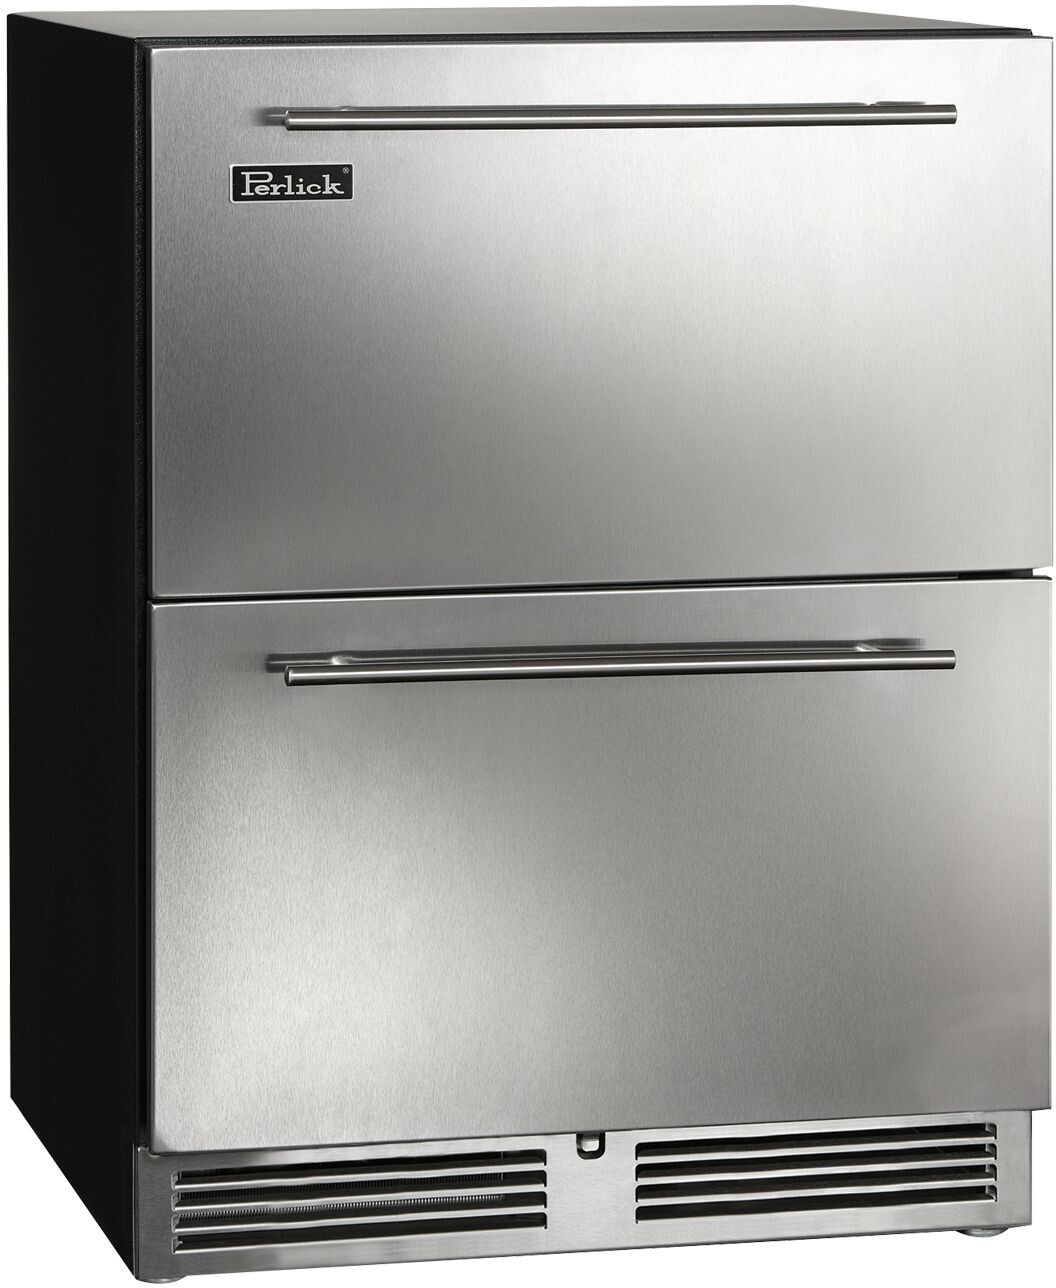 Perlick 24 Inch ADA Compliant 24 Refrigerator Drawers HA24RB46DL